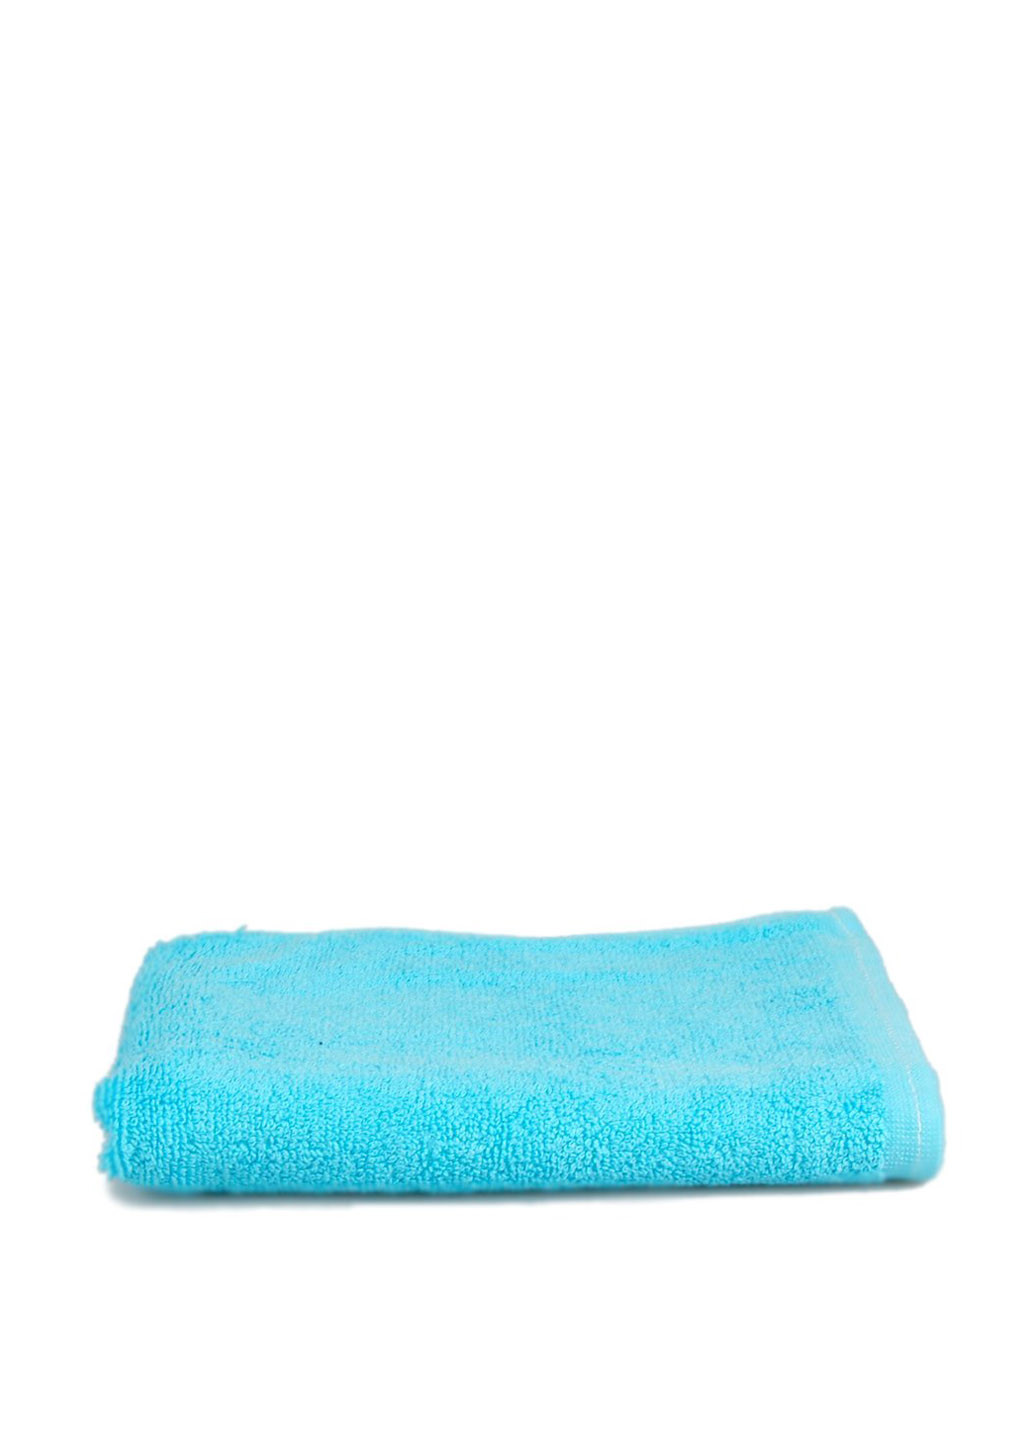 No Brand полотенце, 35х95 см однотонный голубой производство - Туркменистан